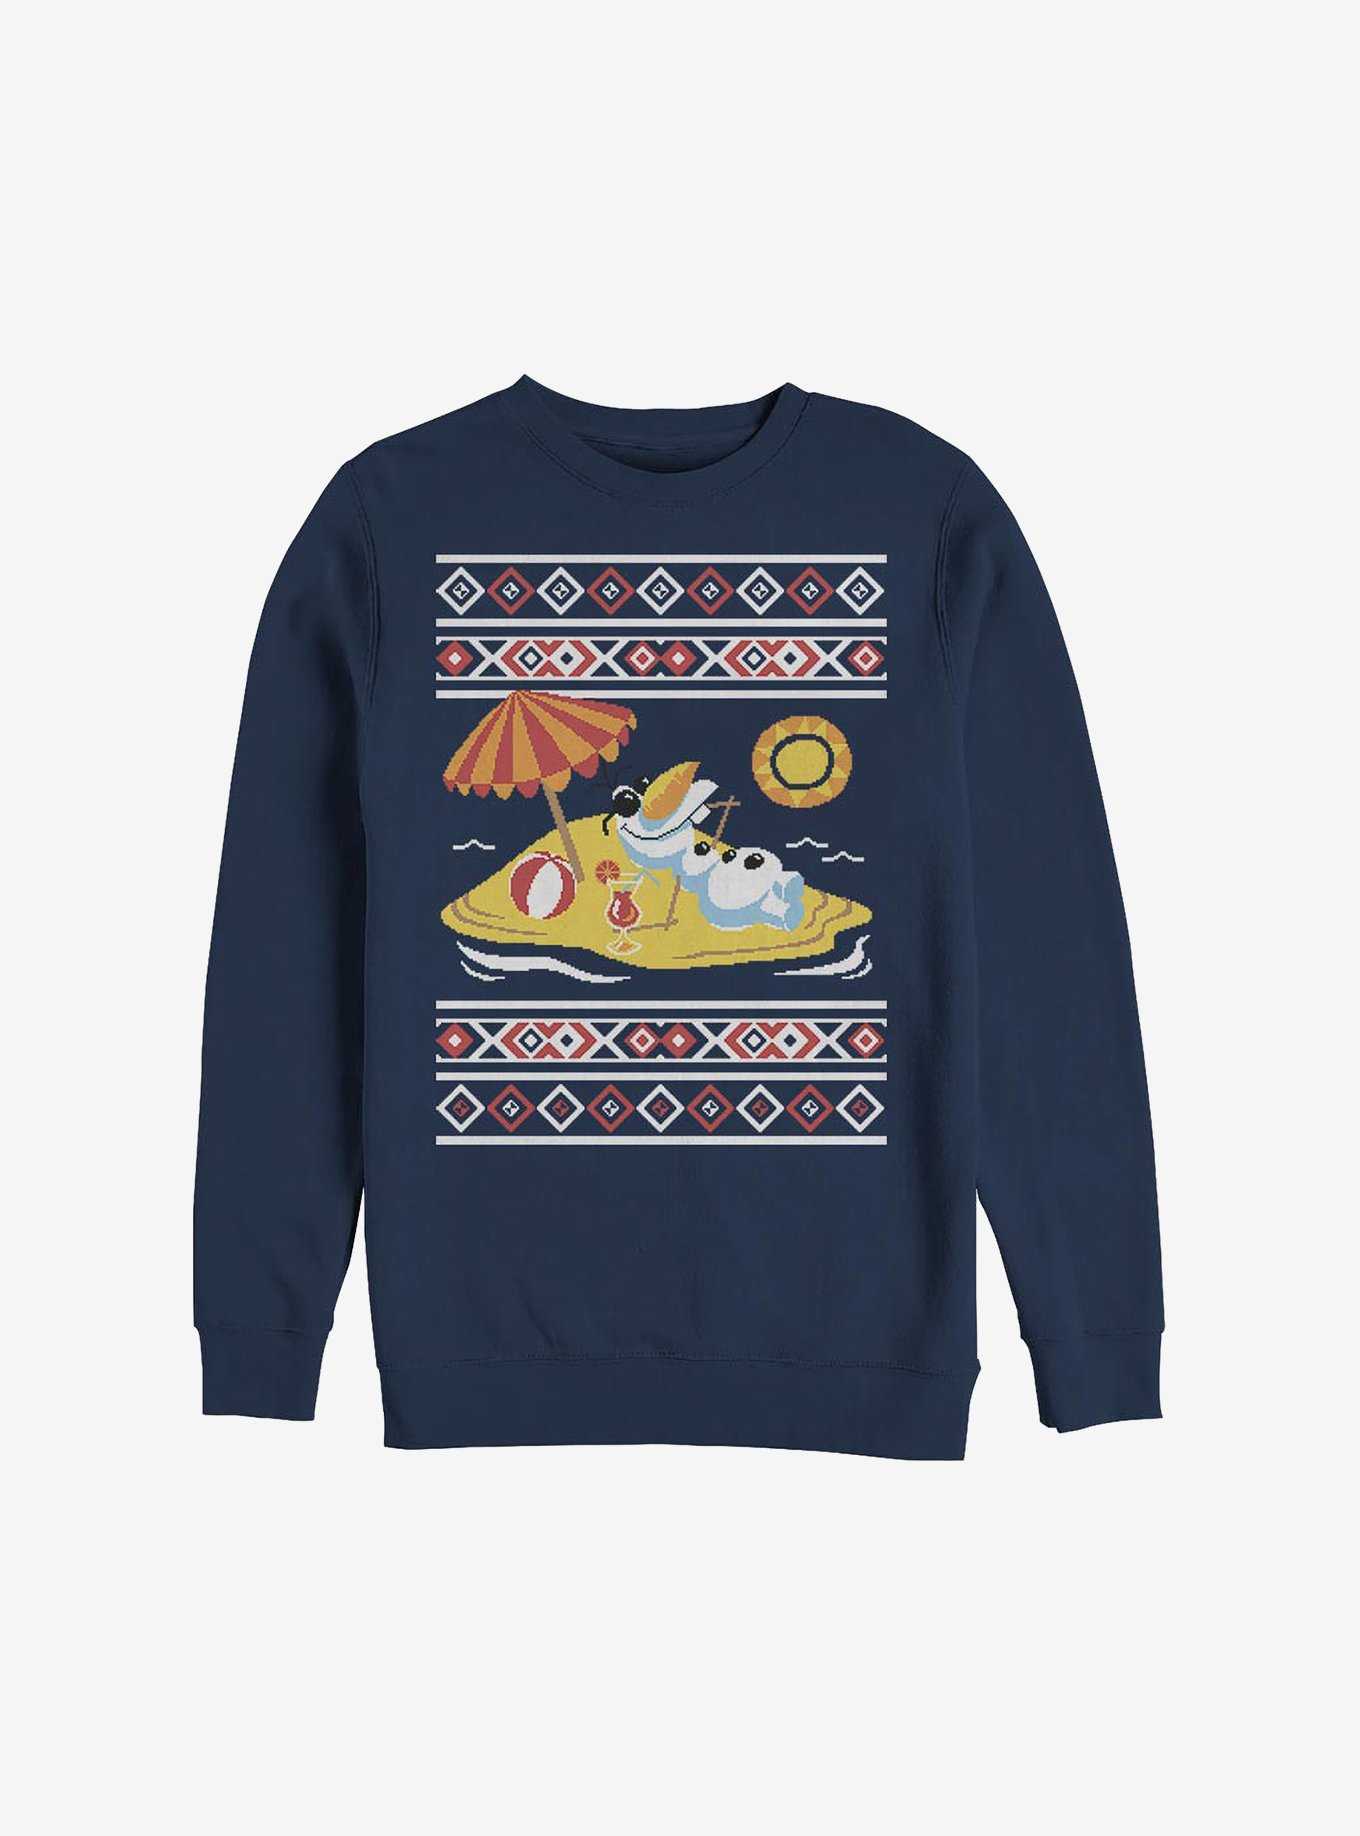 Disney Frozen Olaf Sweater Holiday Sweatshirt, , hi-res